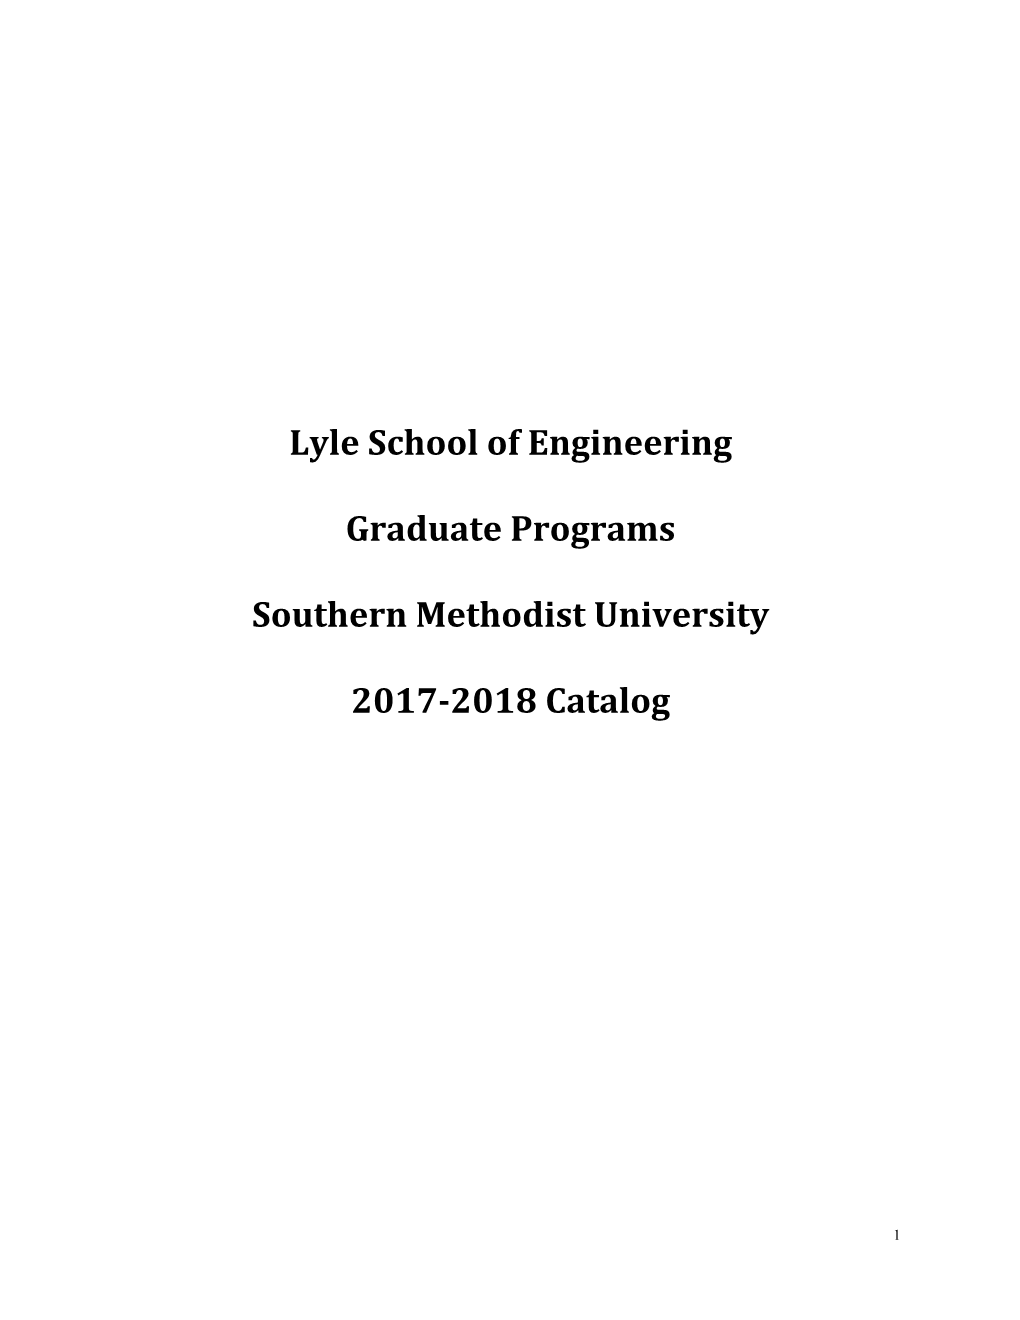 Lyle School of Engineering Graduate Programs Southern Methodist